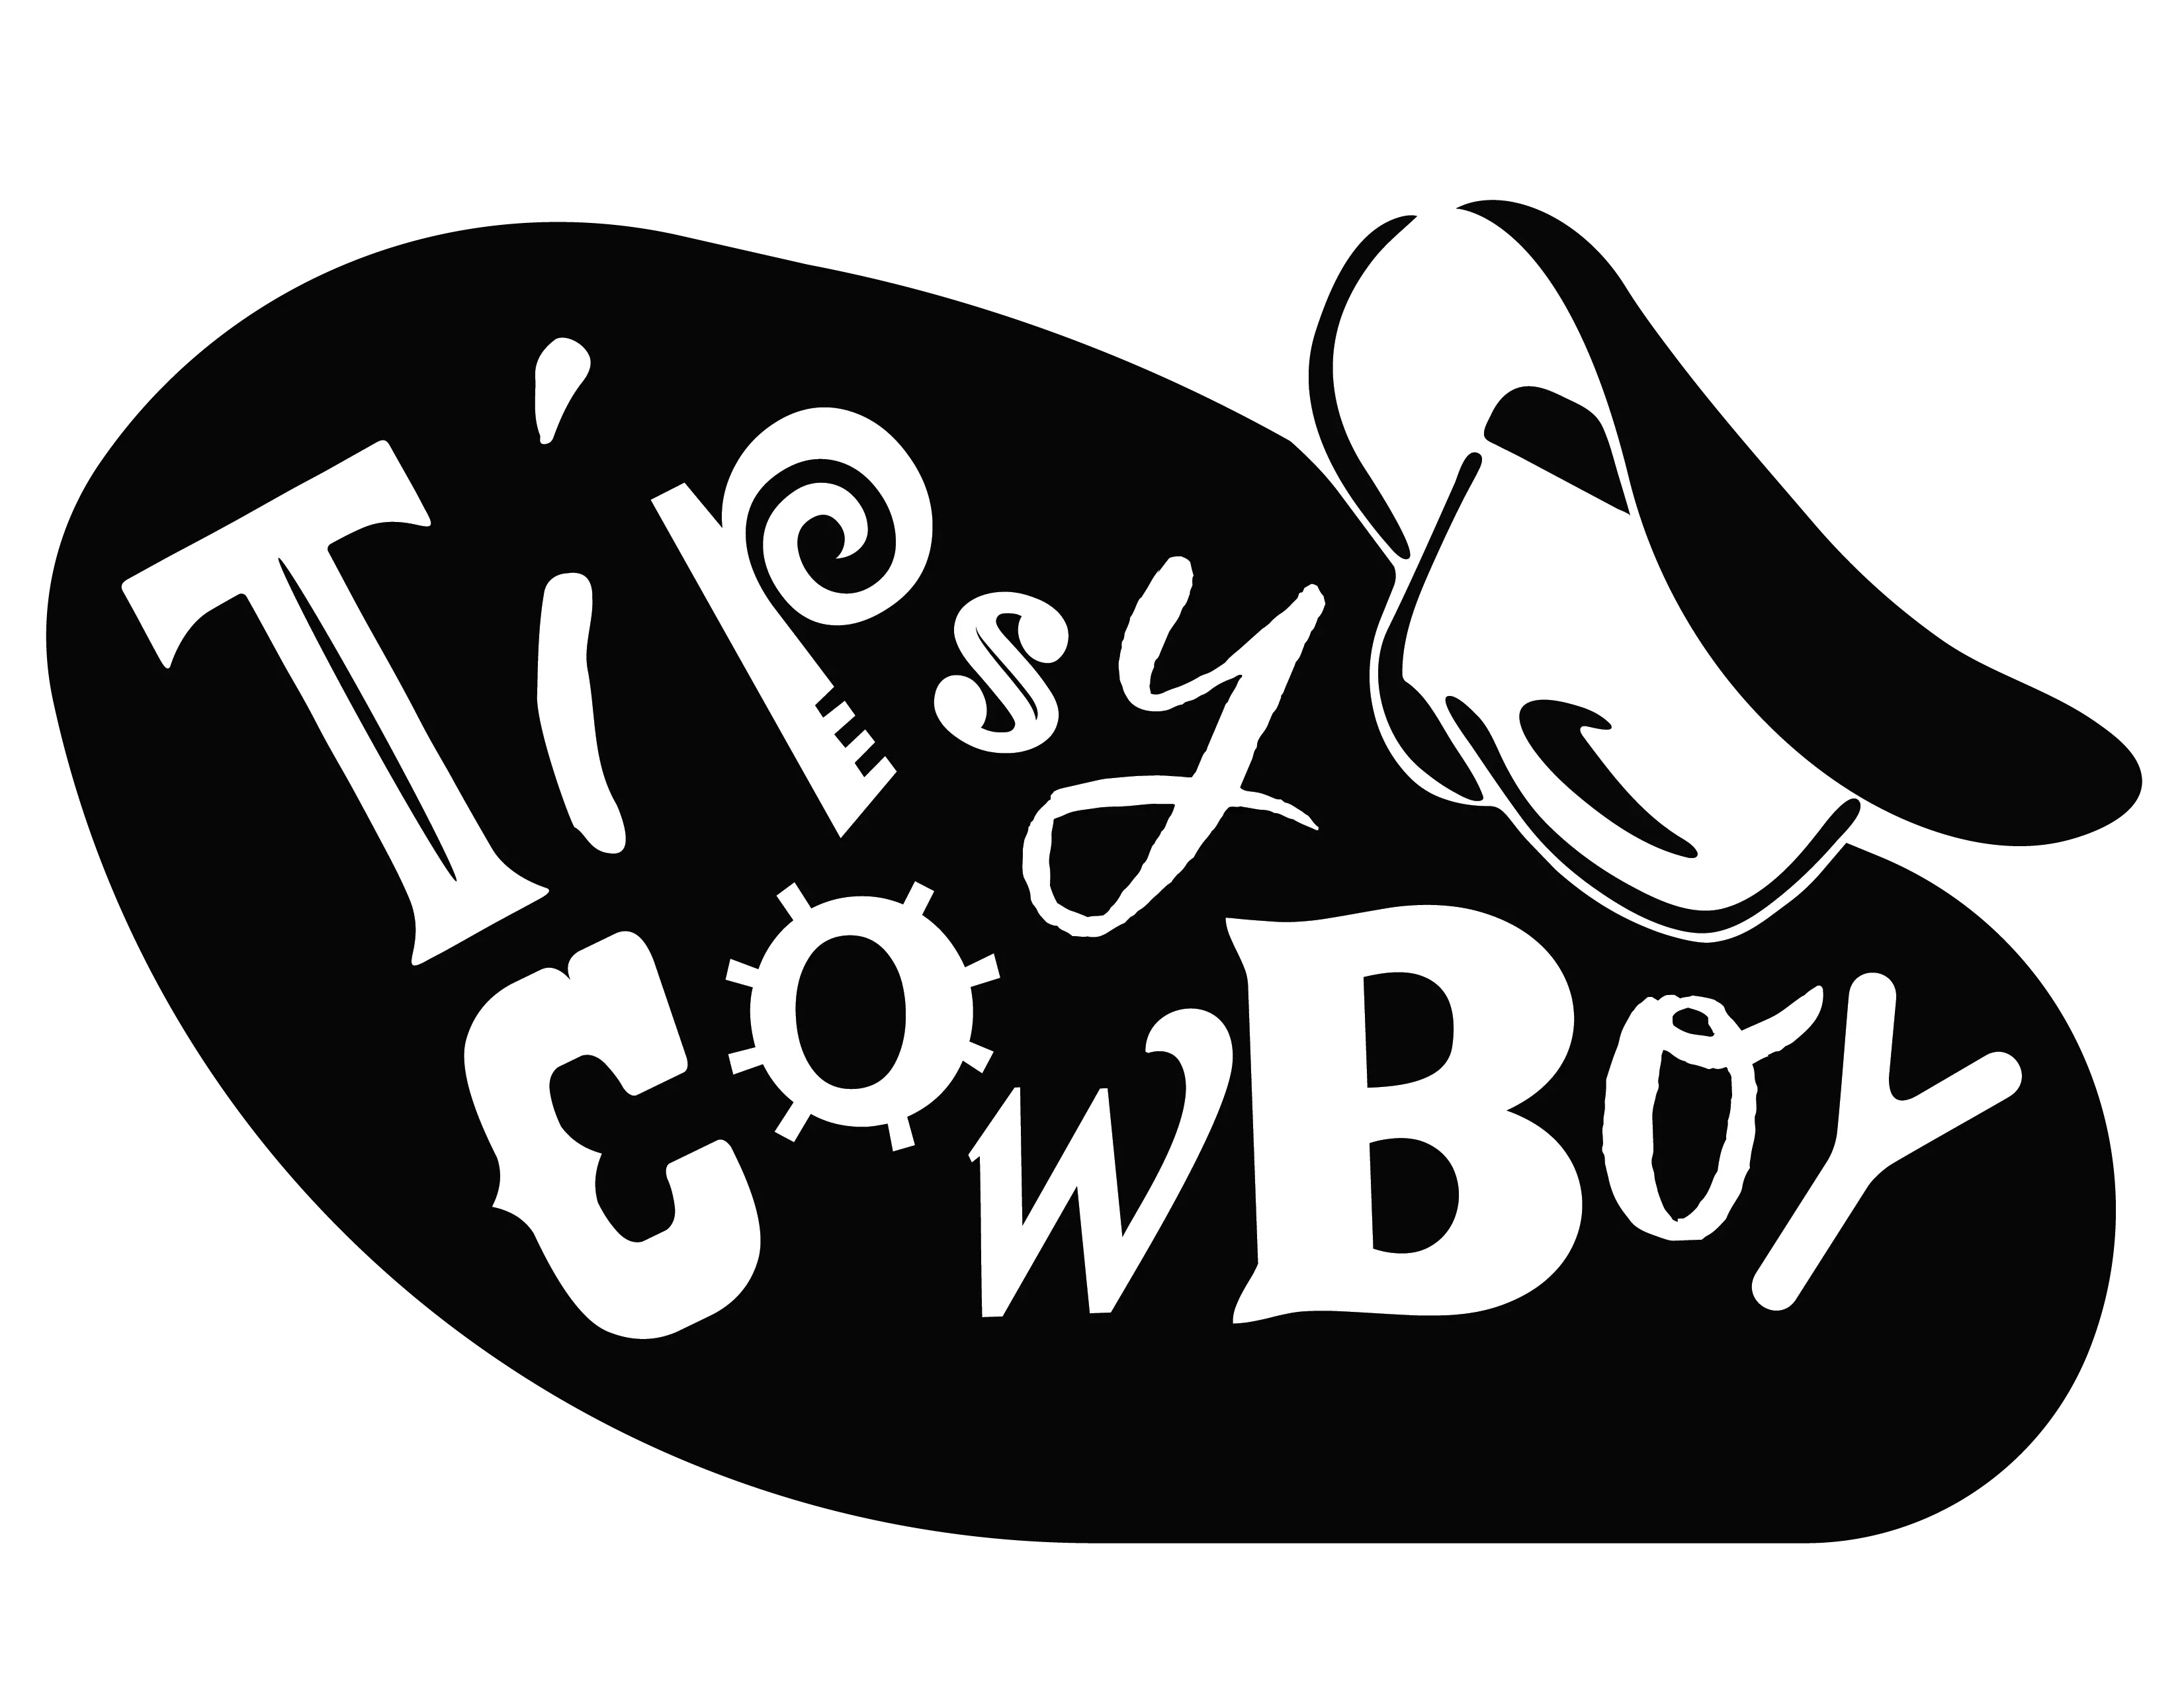 Tipsy Cowboy